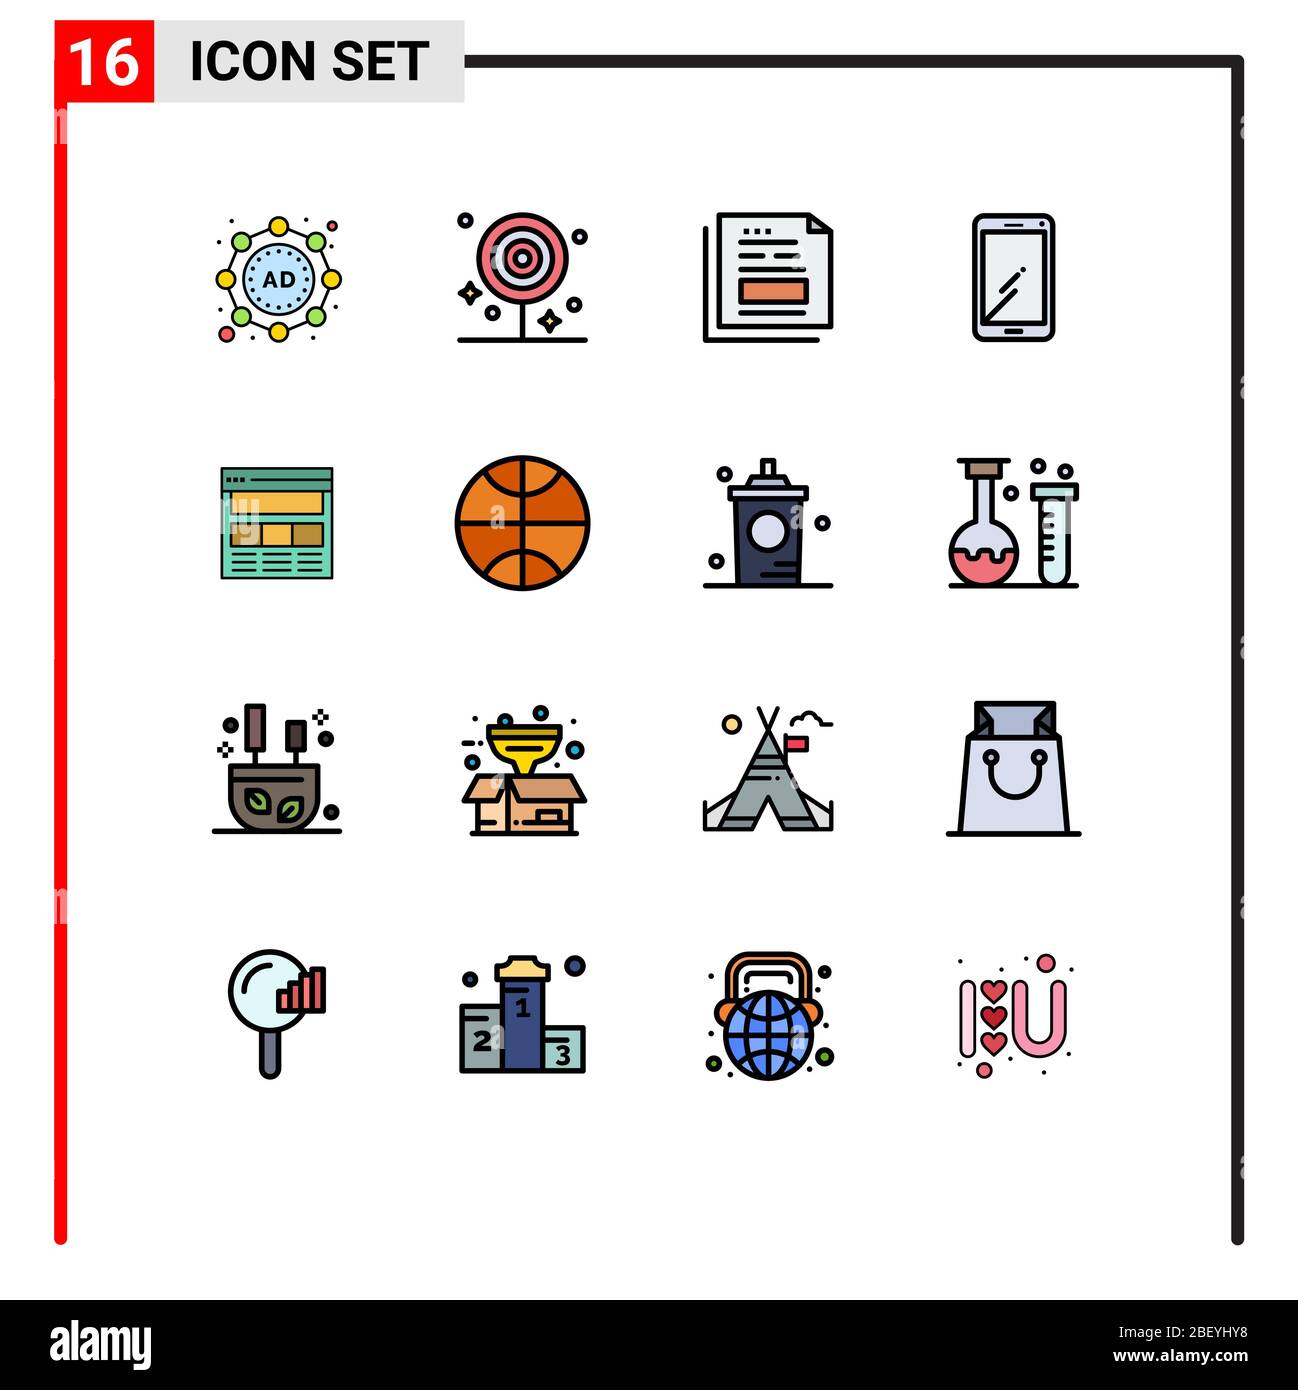 16 iconos creativos modernos signos y símbolos de Samsung, móvil, datos,  teléfono inteligente, oficina Editable Creative Vector Design Elements  Imagen Vector de stock - Alamy